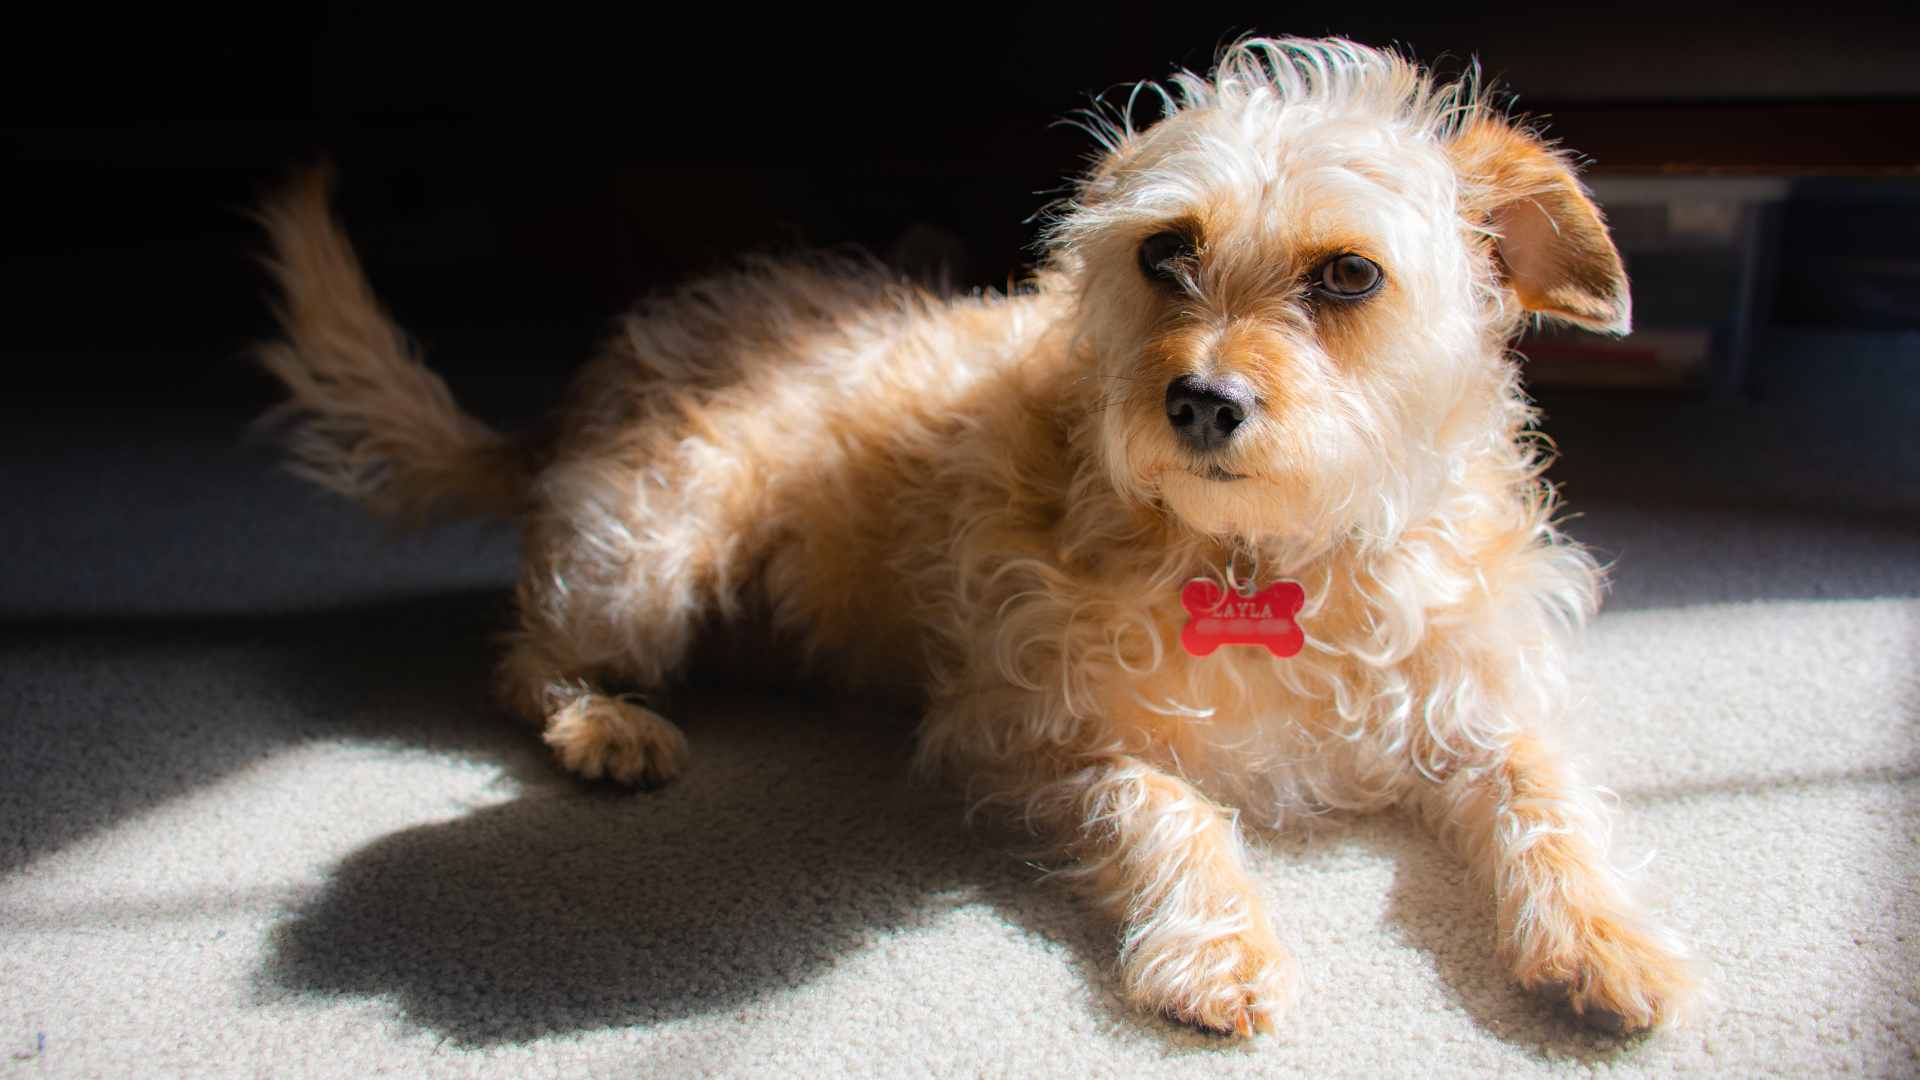 stock photo of dog on white carpet